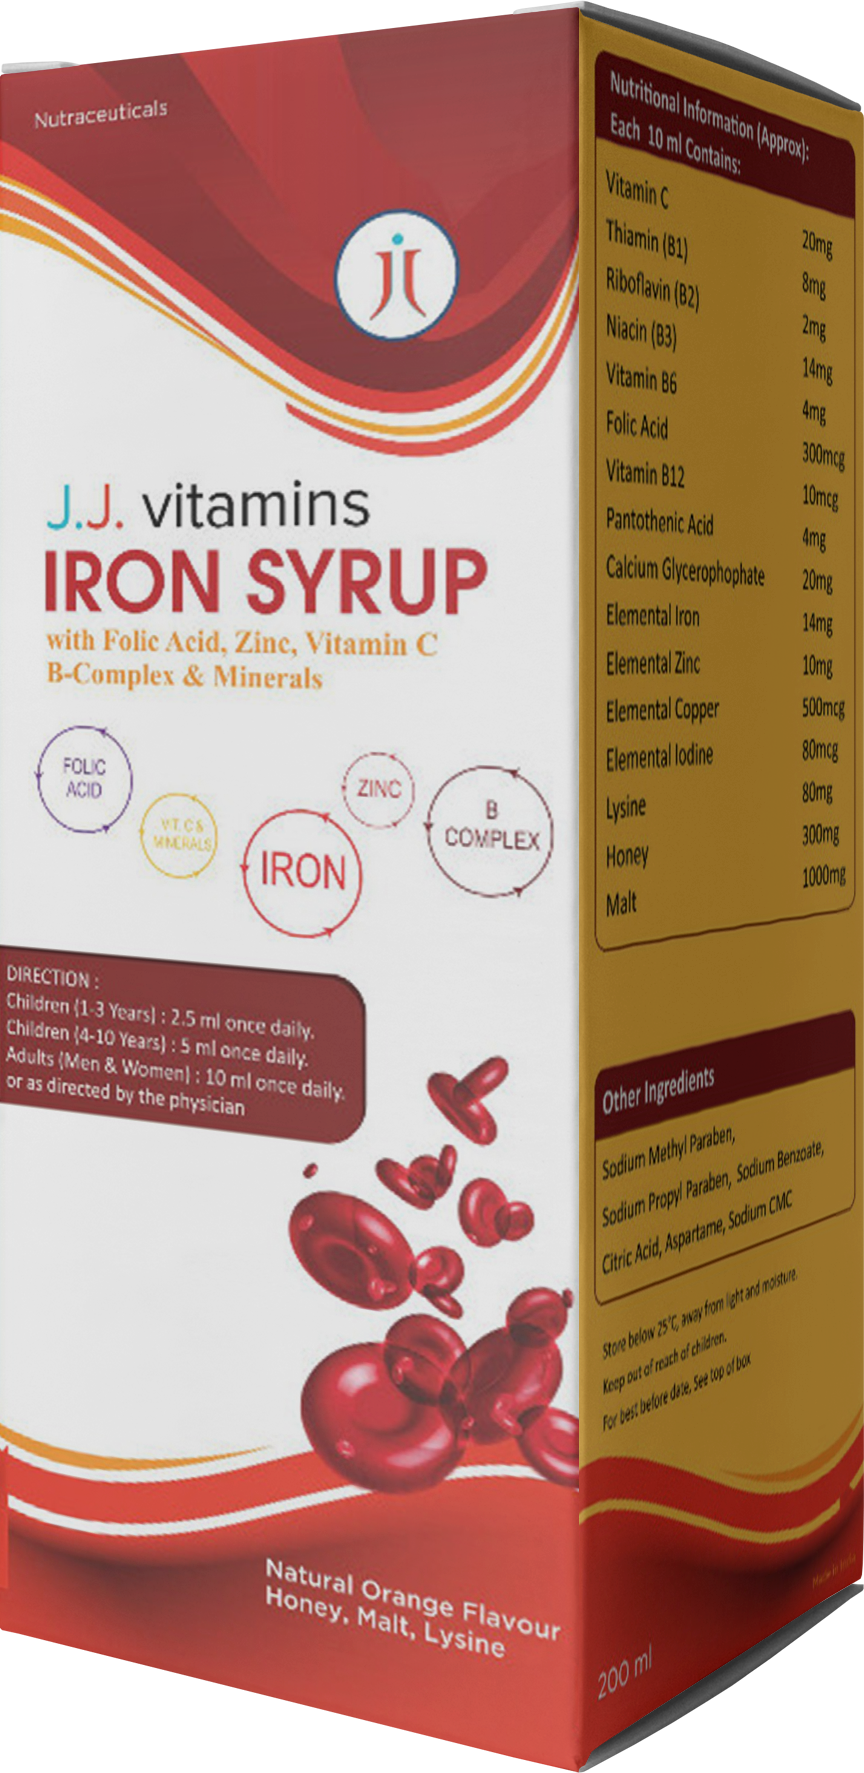 J.J. Vitamins IRON SYRUP